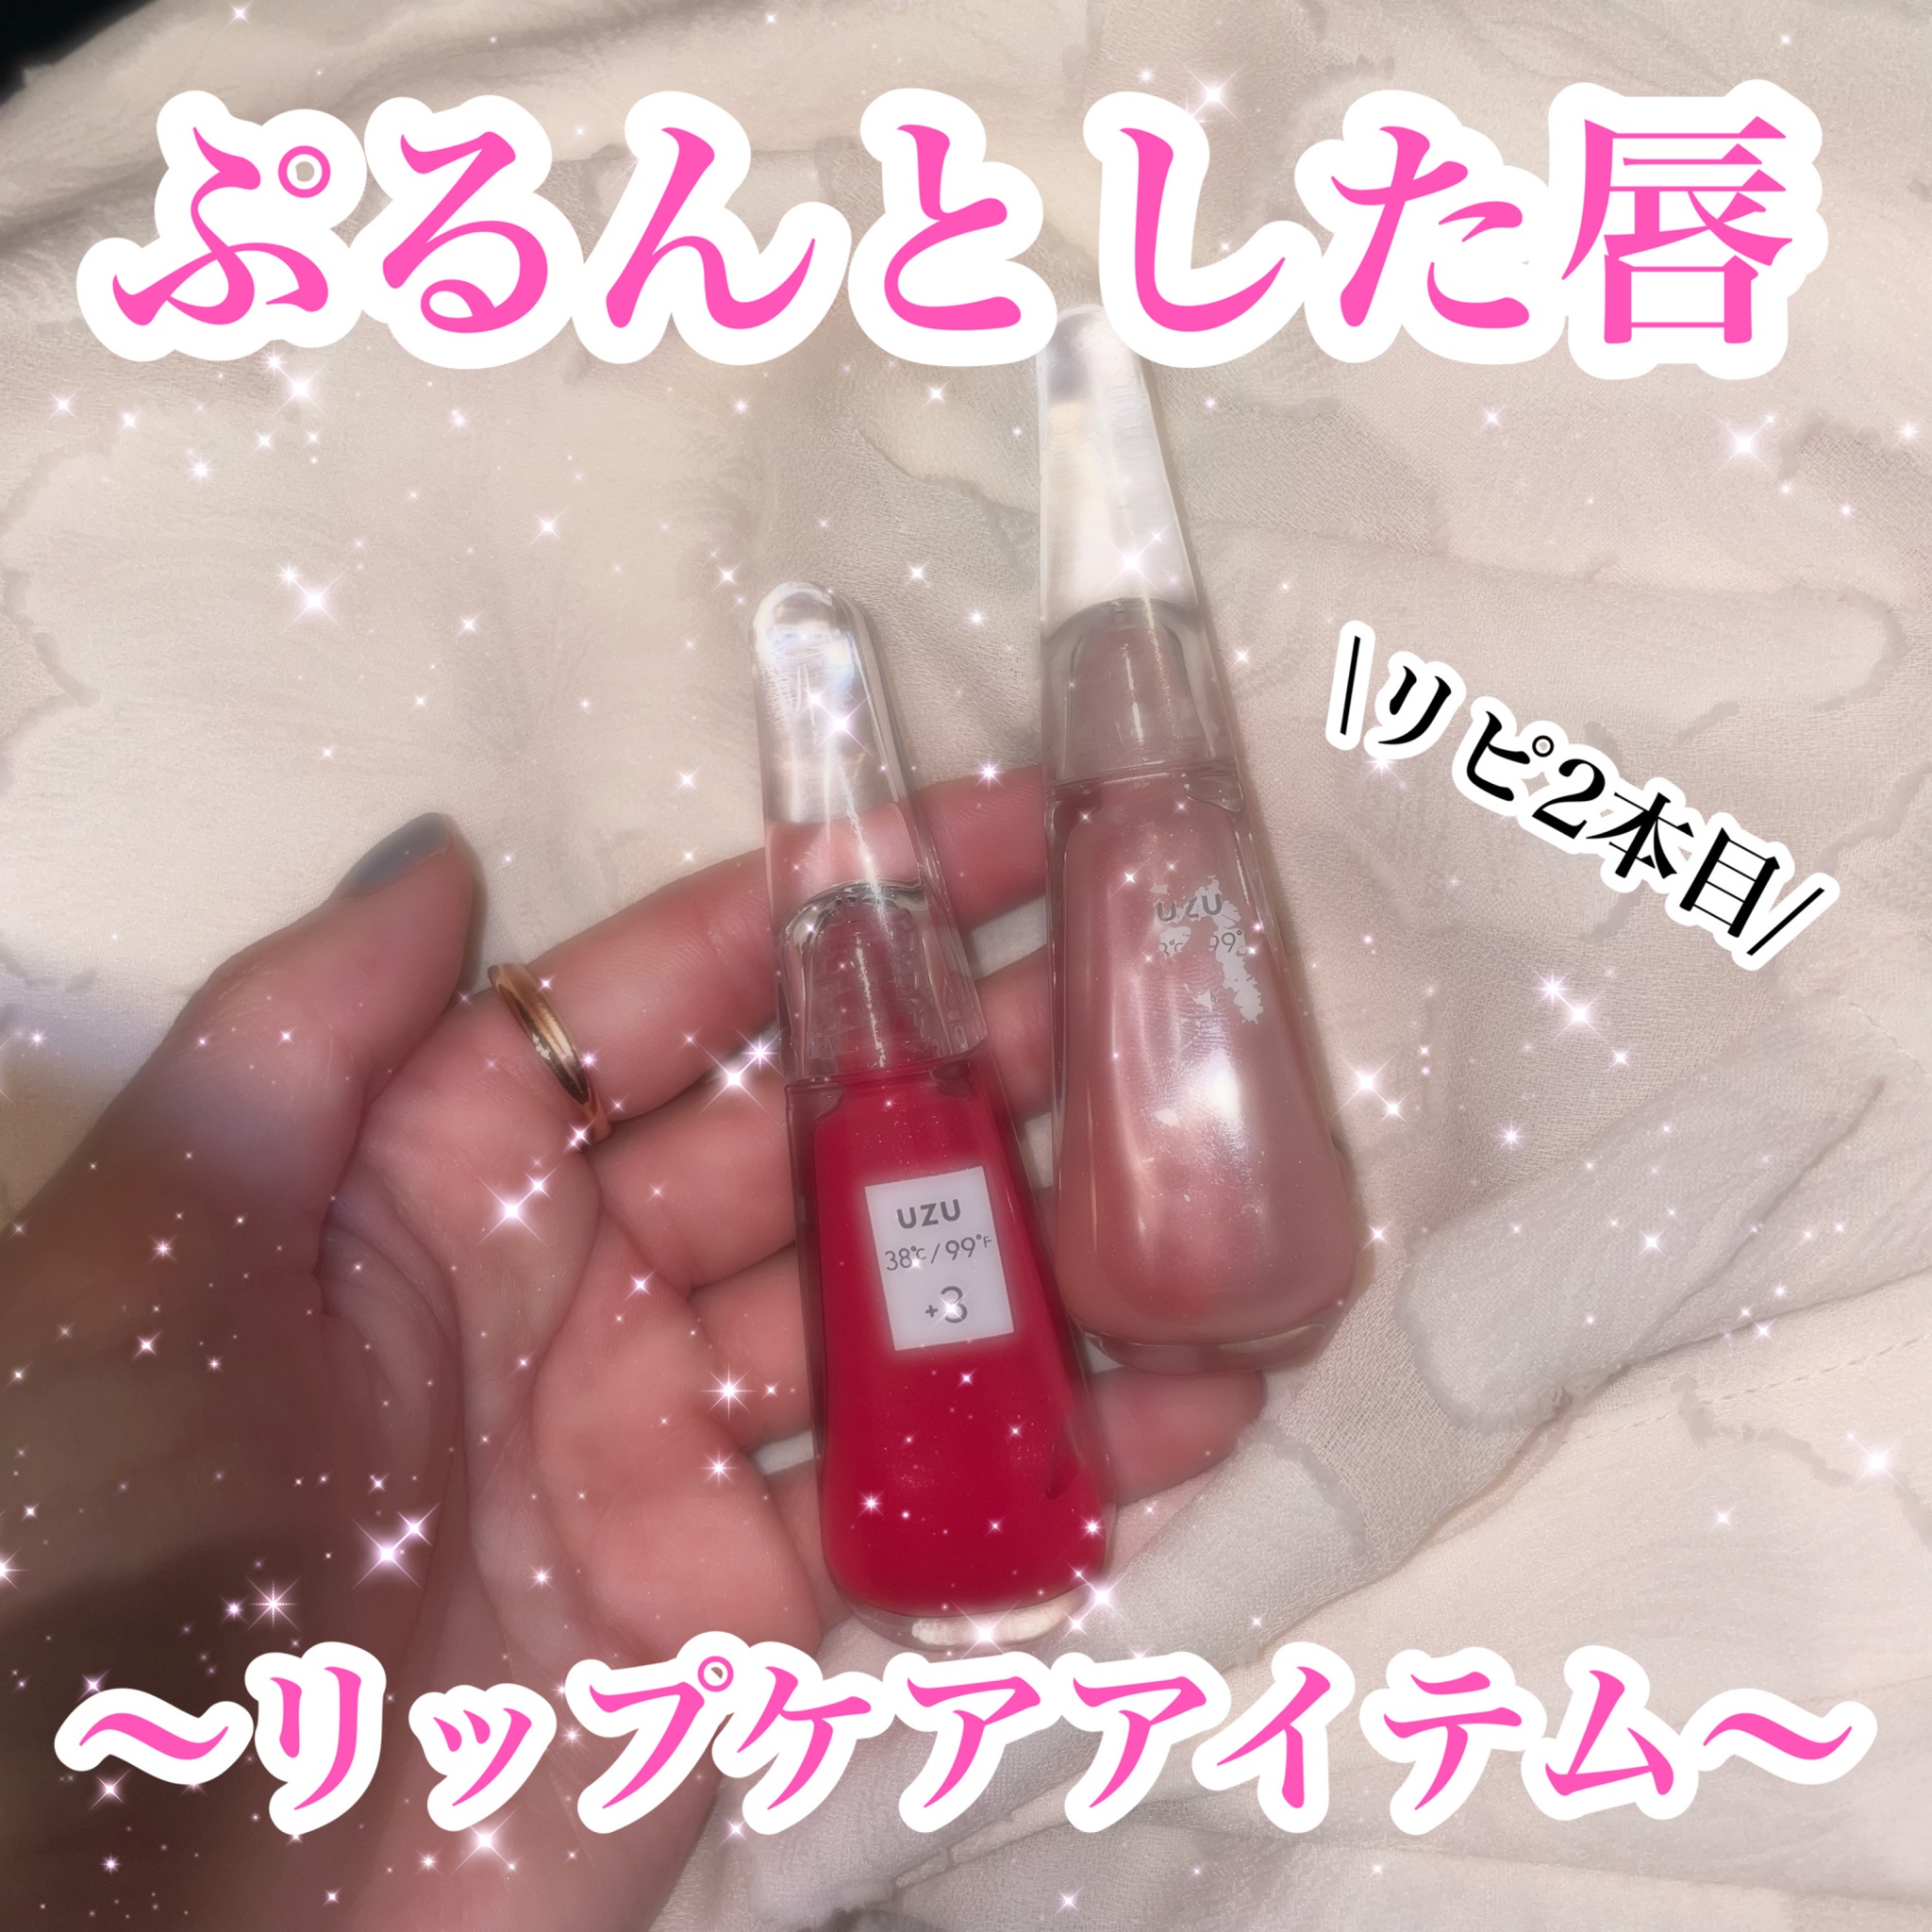 UZU BY FLOWFUSHI / 38°C/99°F Lip Treatment +3 pinkの公式商品情報